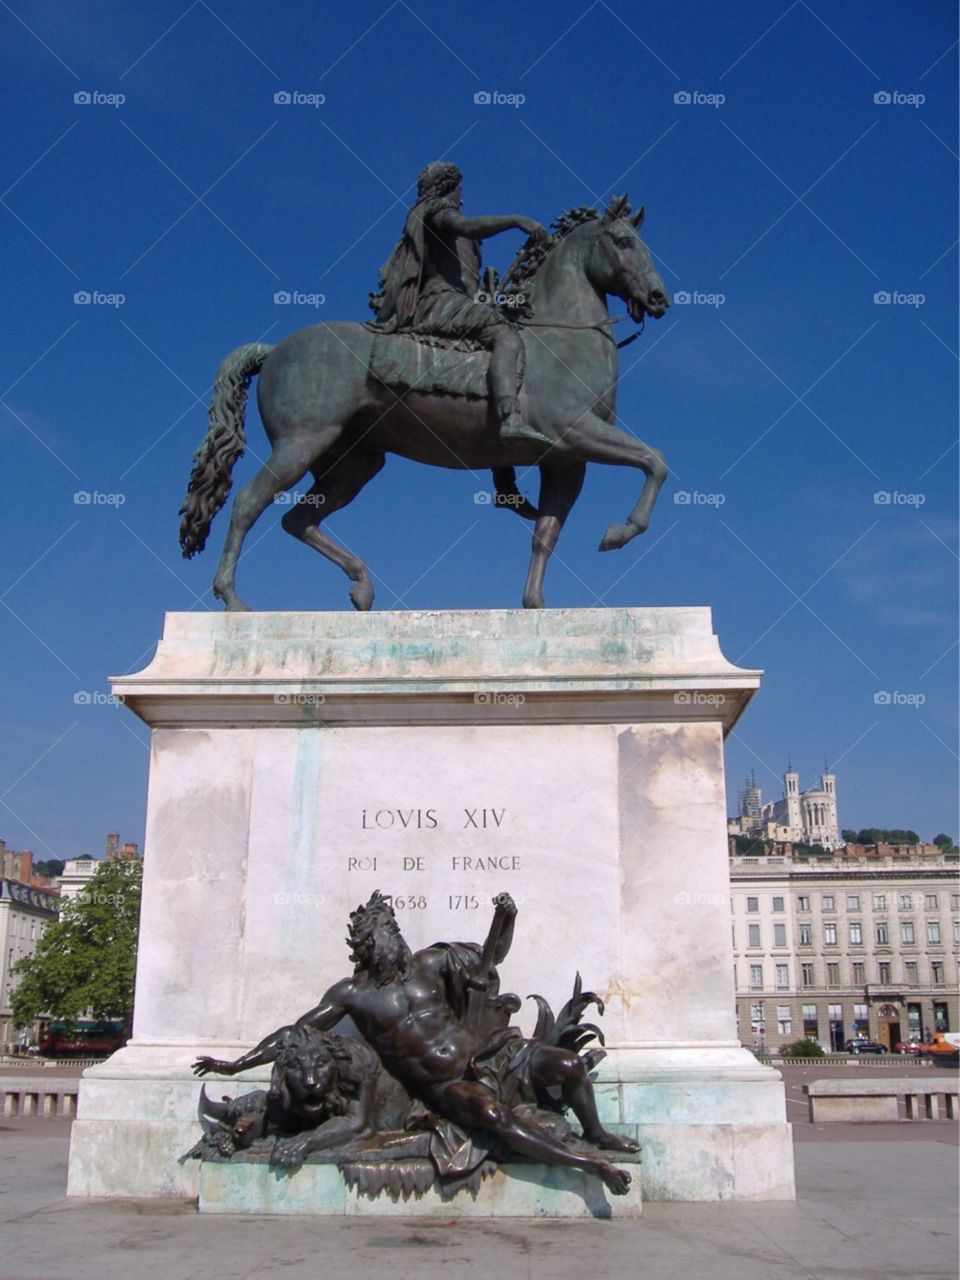 Statue of Louis XIV, Roi de France in a plaza. Lyon, France. 